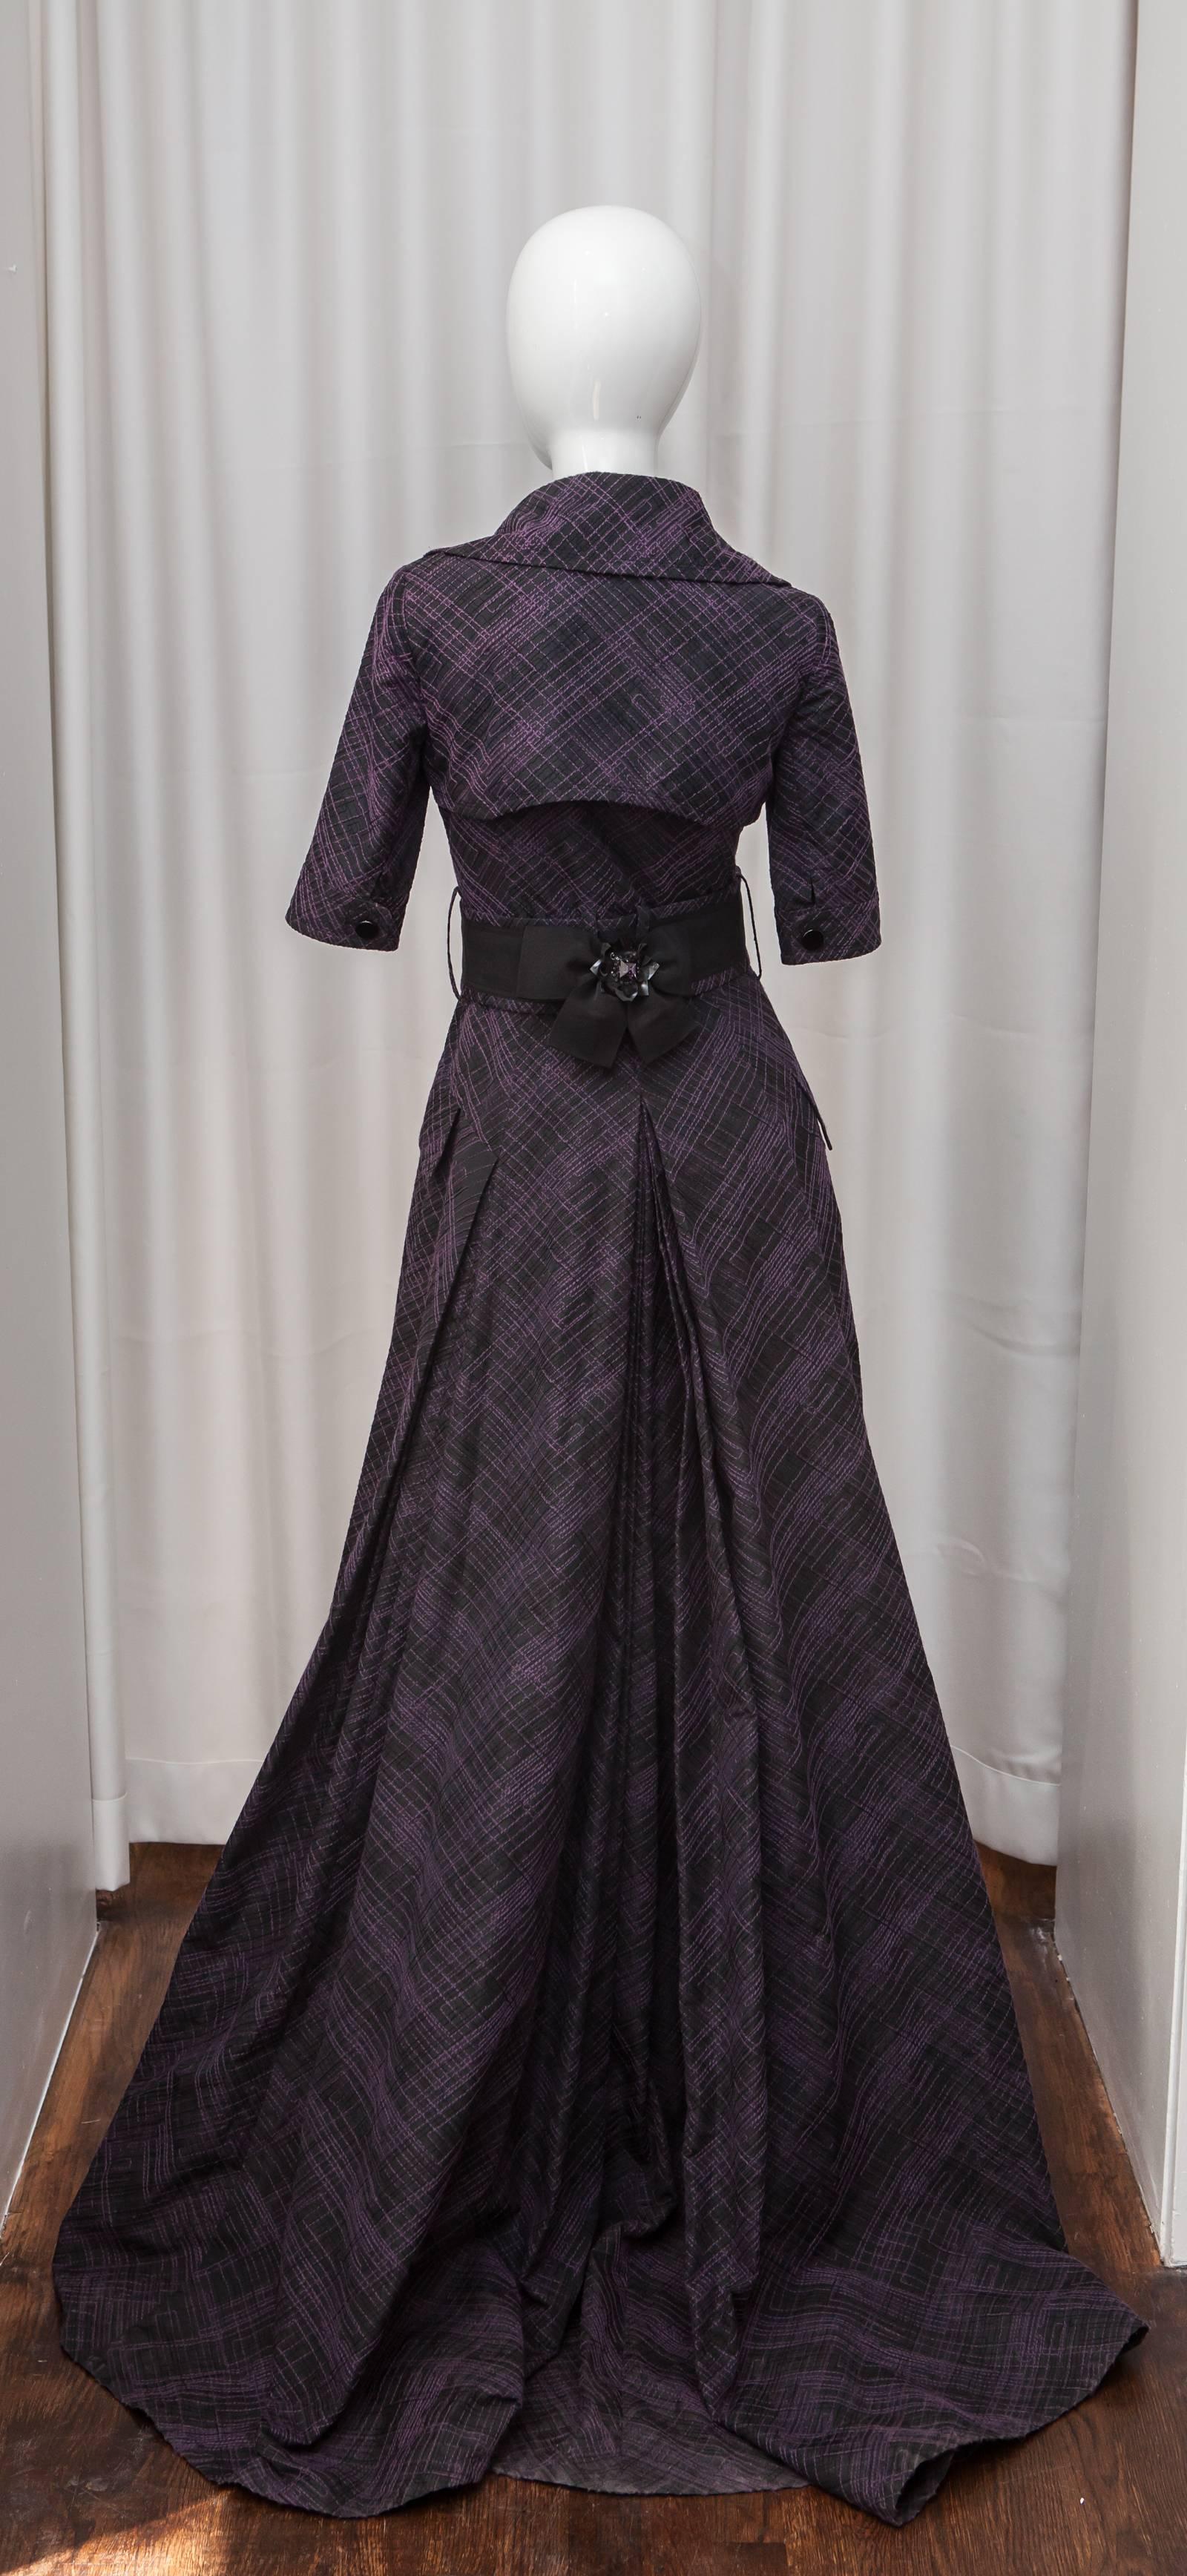 Carolina Herrera Purple and Black Patterned Gown 5